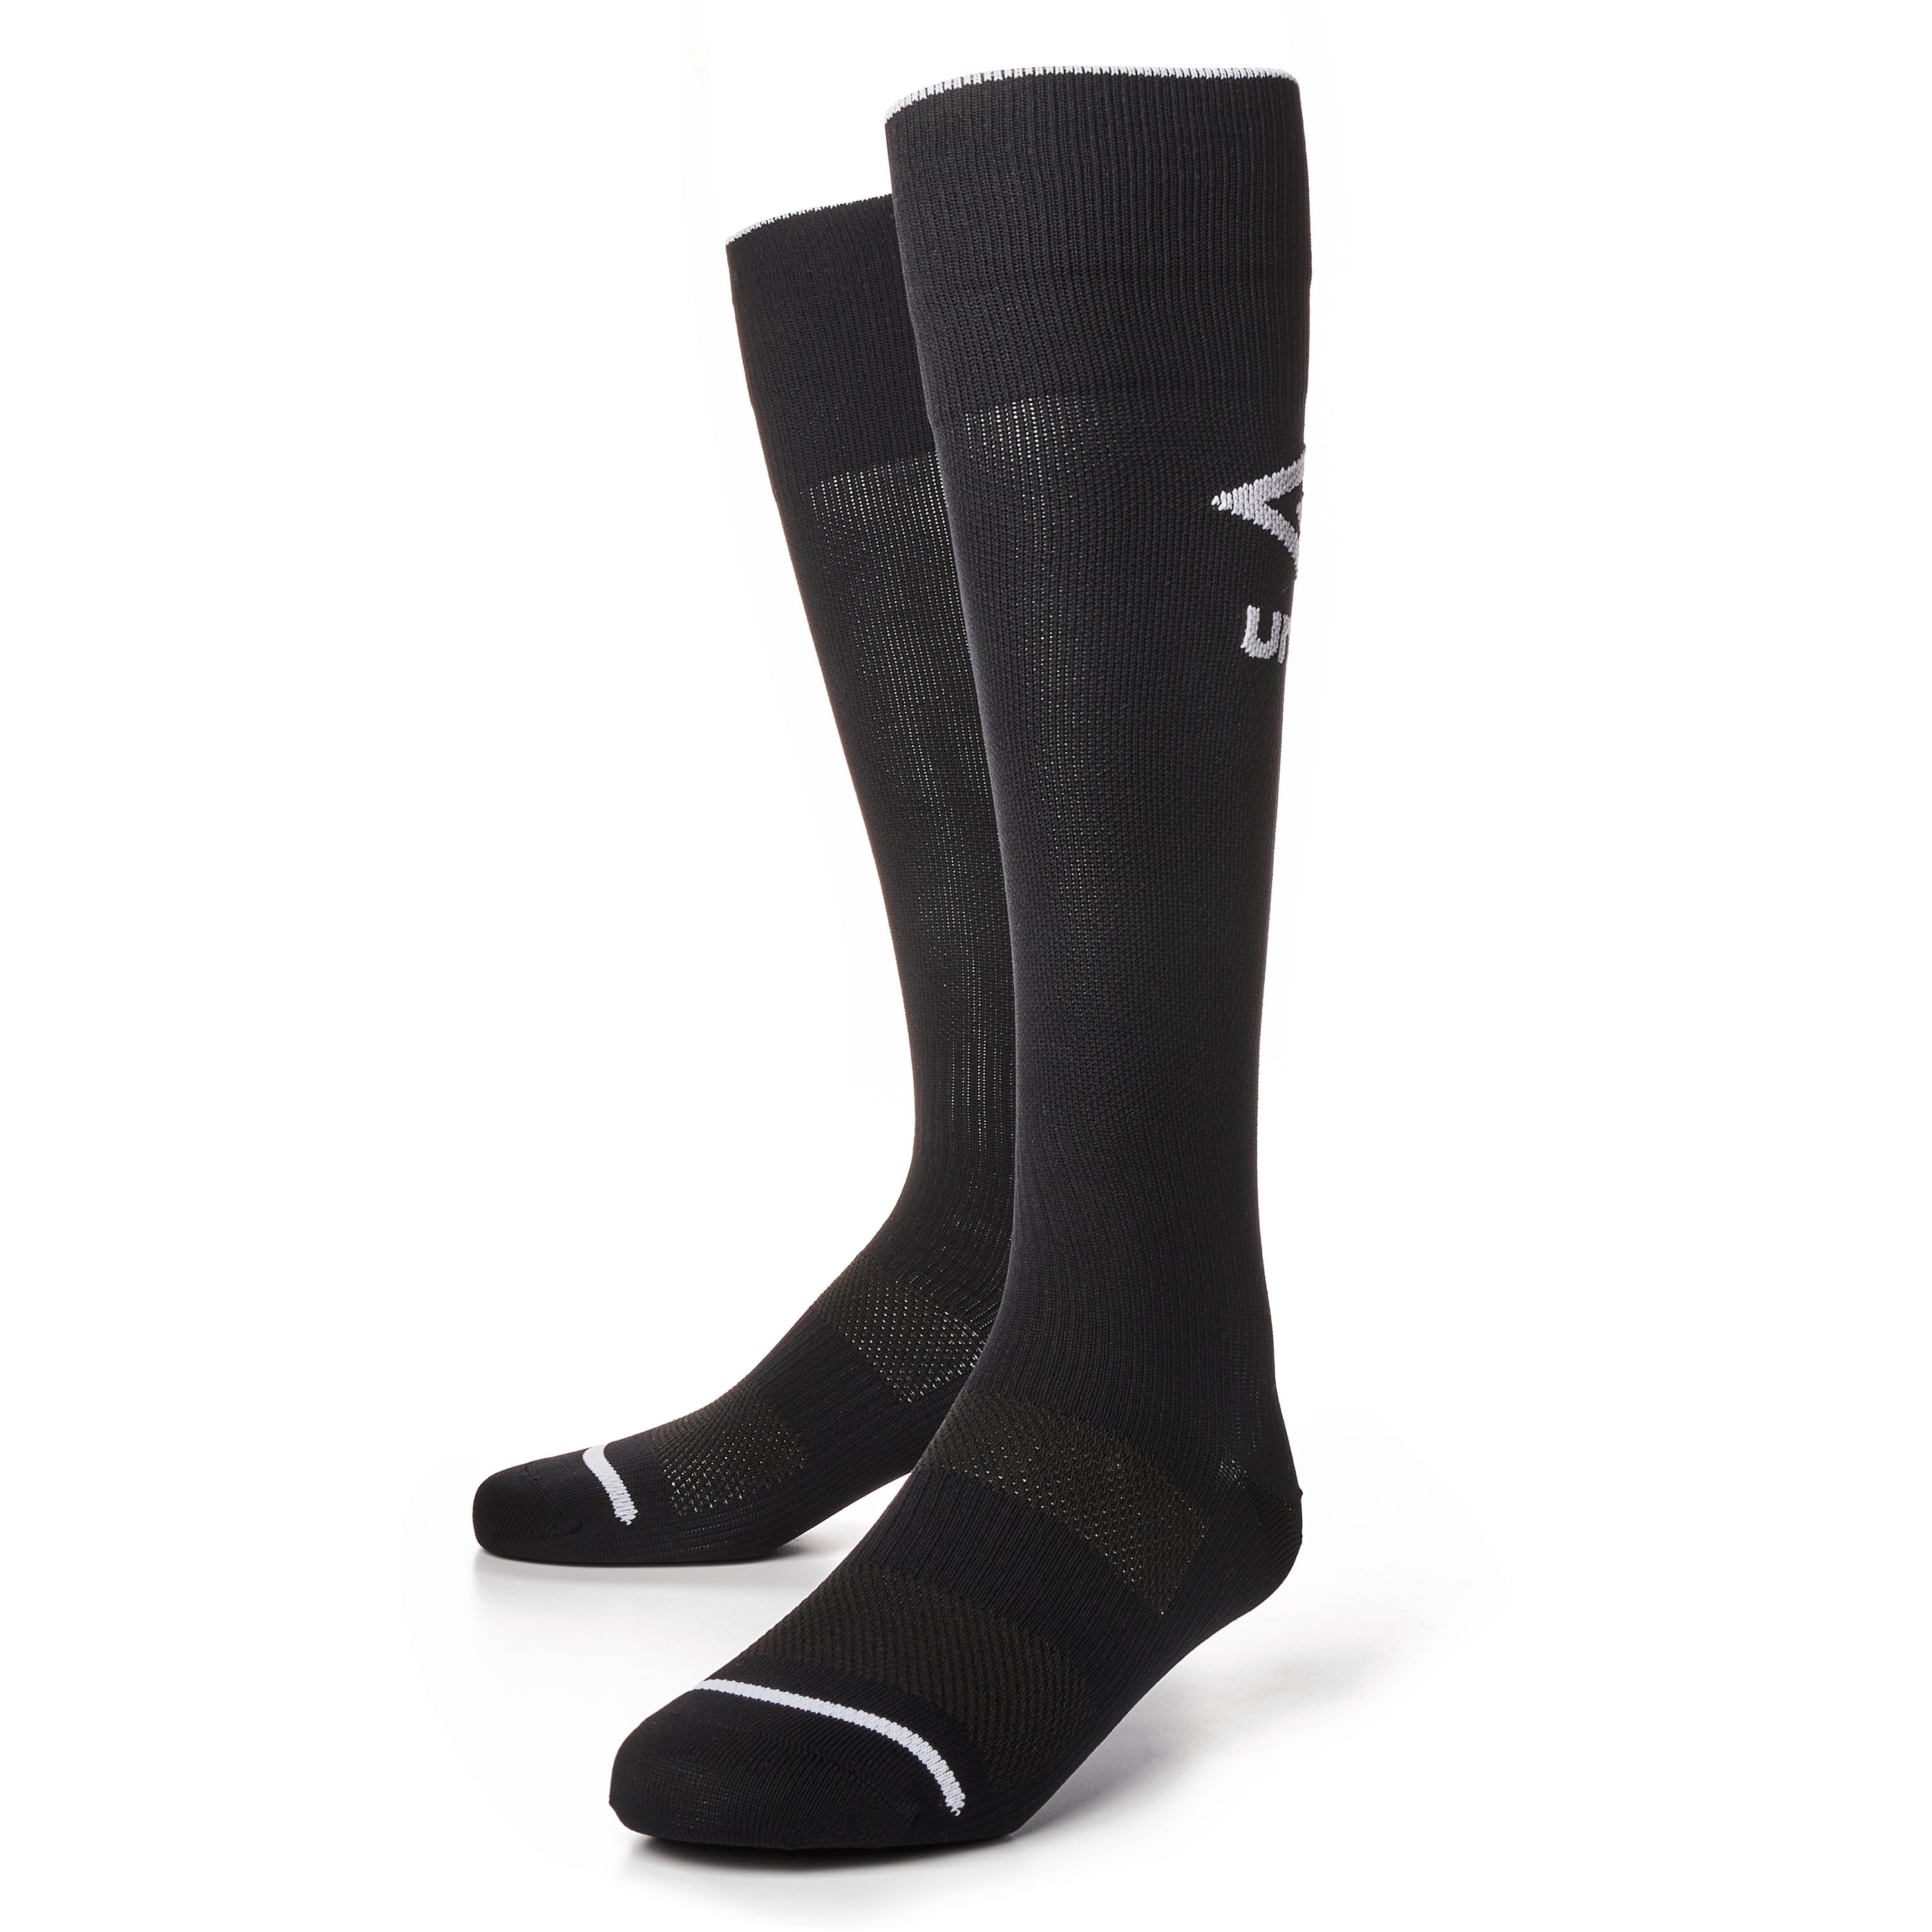 Umbro Sports Socks Mens Calf Assorted Black and White Uk 6-11 Black,Grey,White 